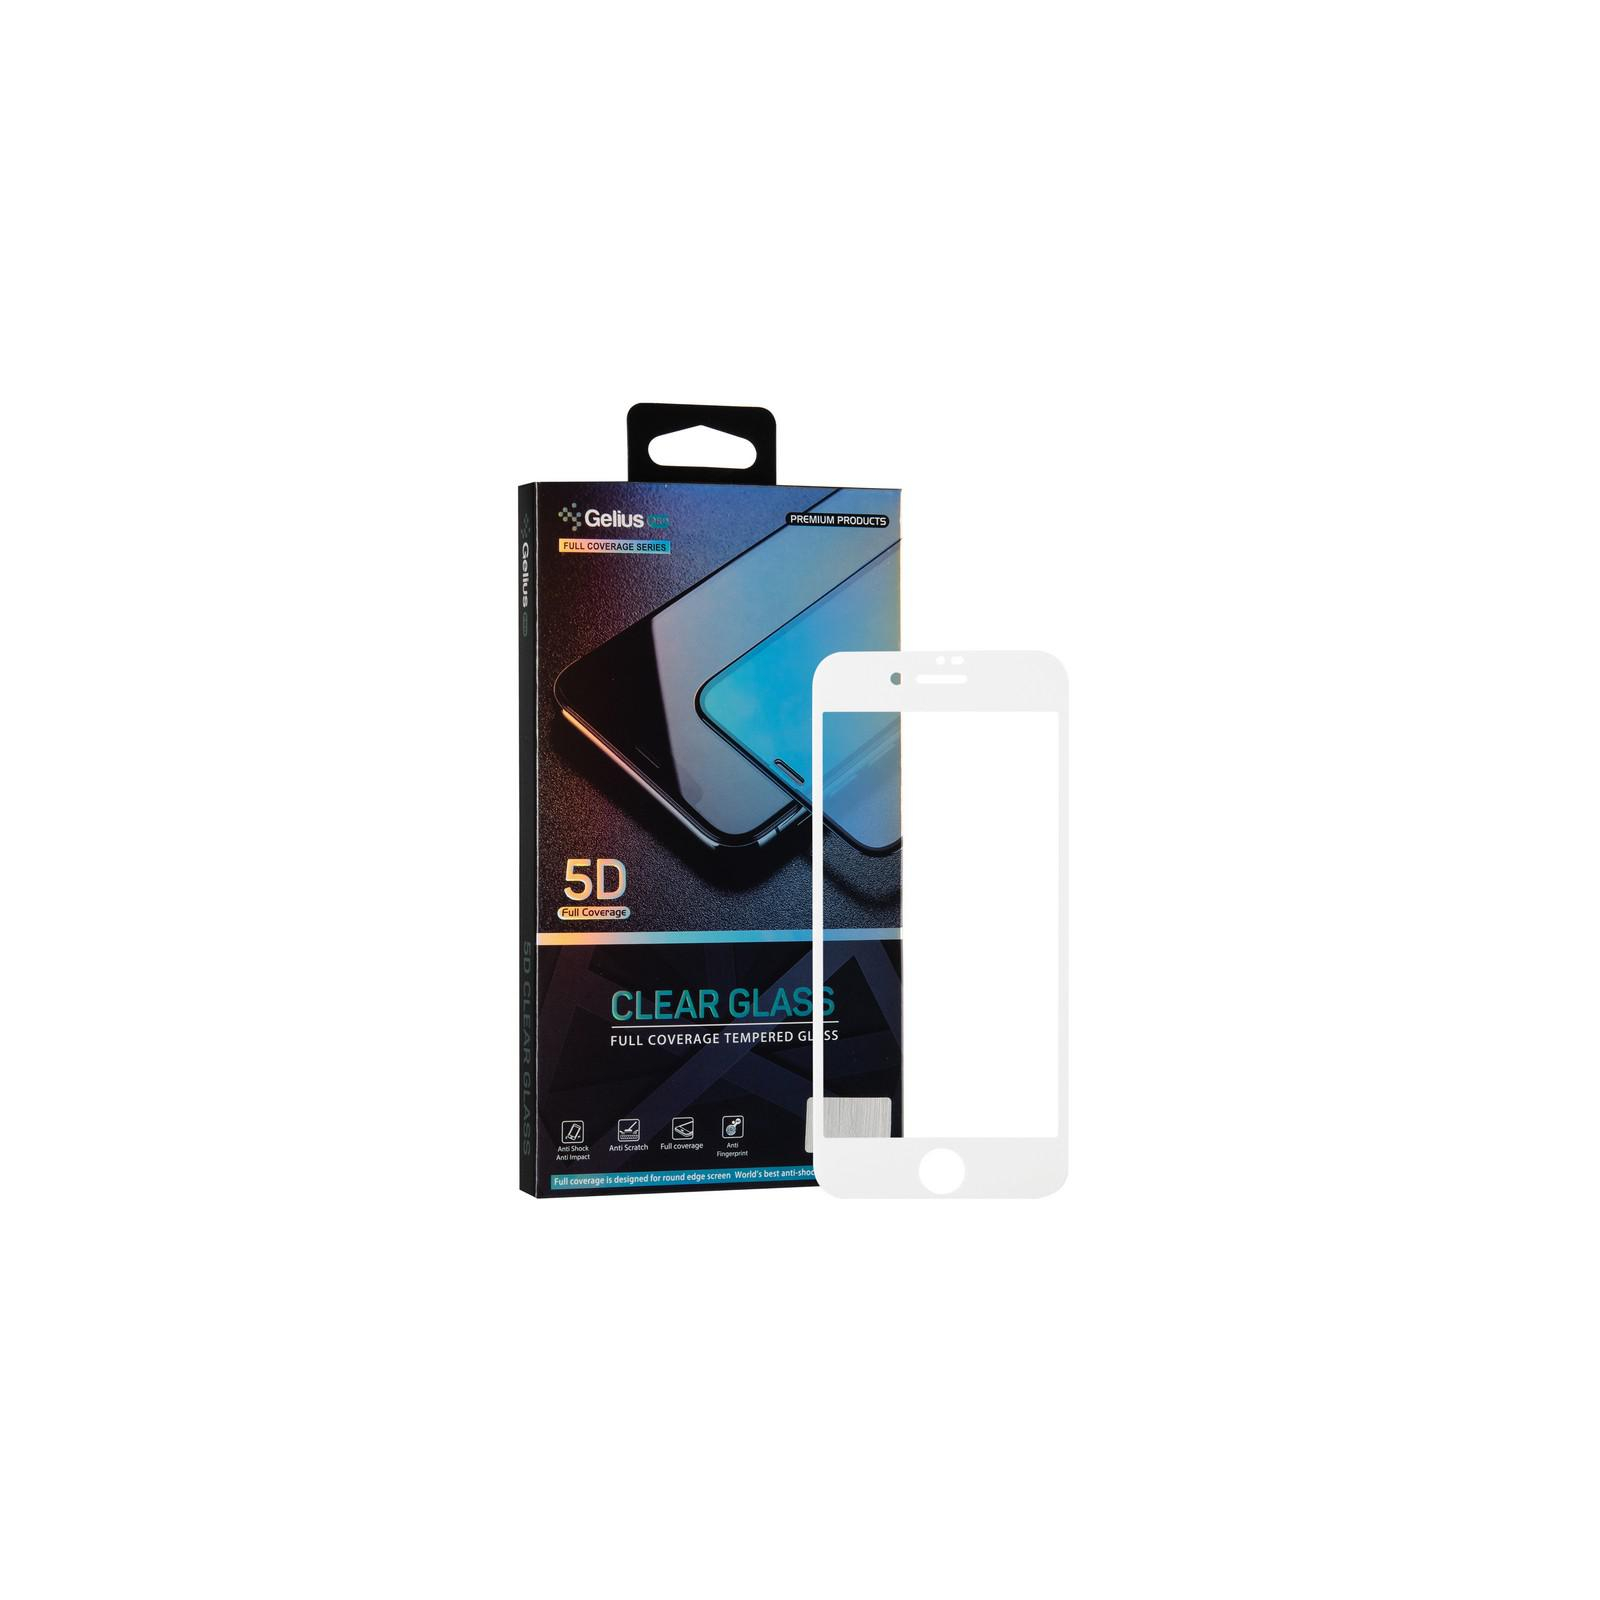 Скло захисне Gelius Pro 5D Clear Glass for iPhone 7/8 White (00000070943) зображення 3